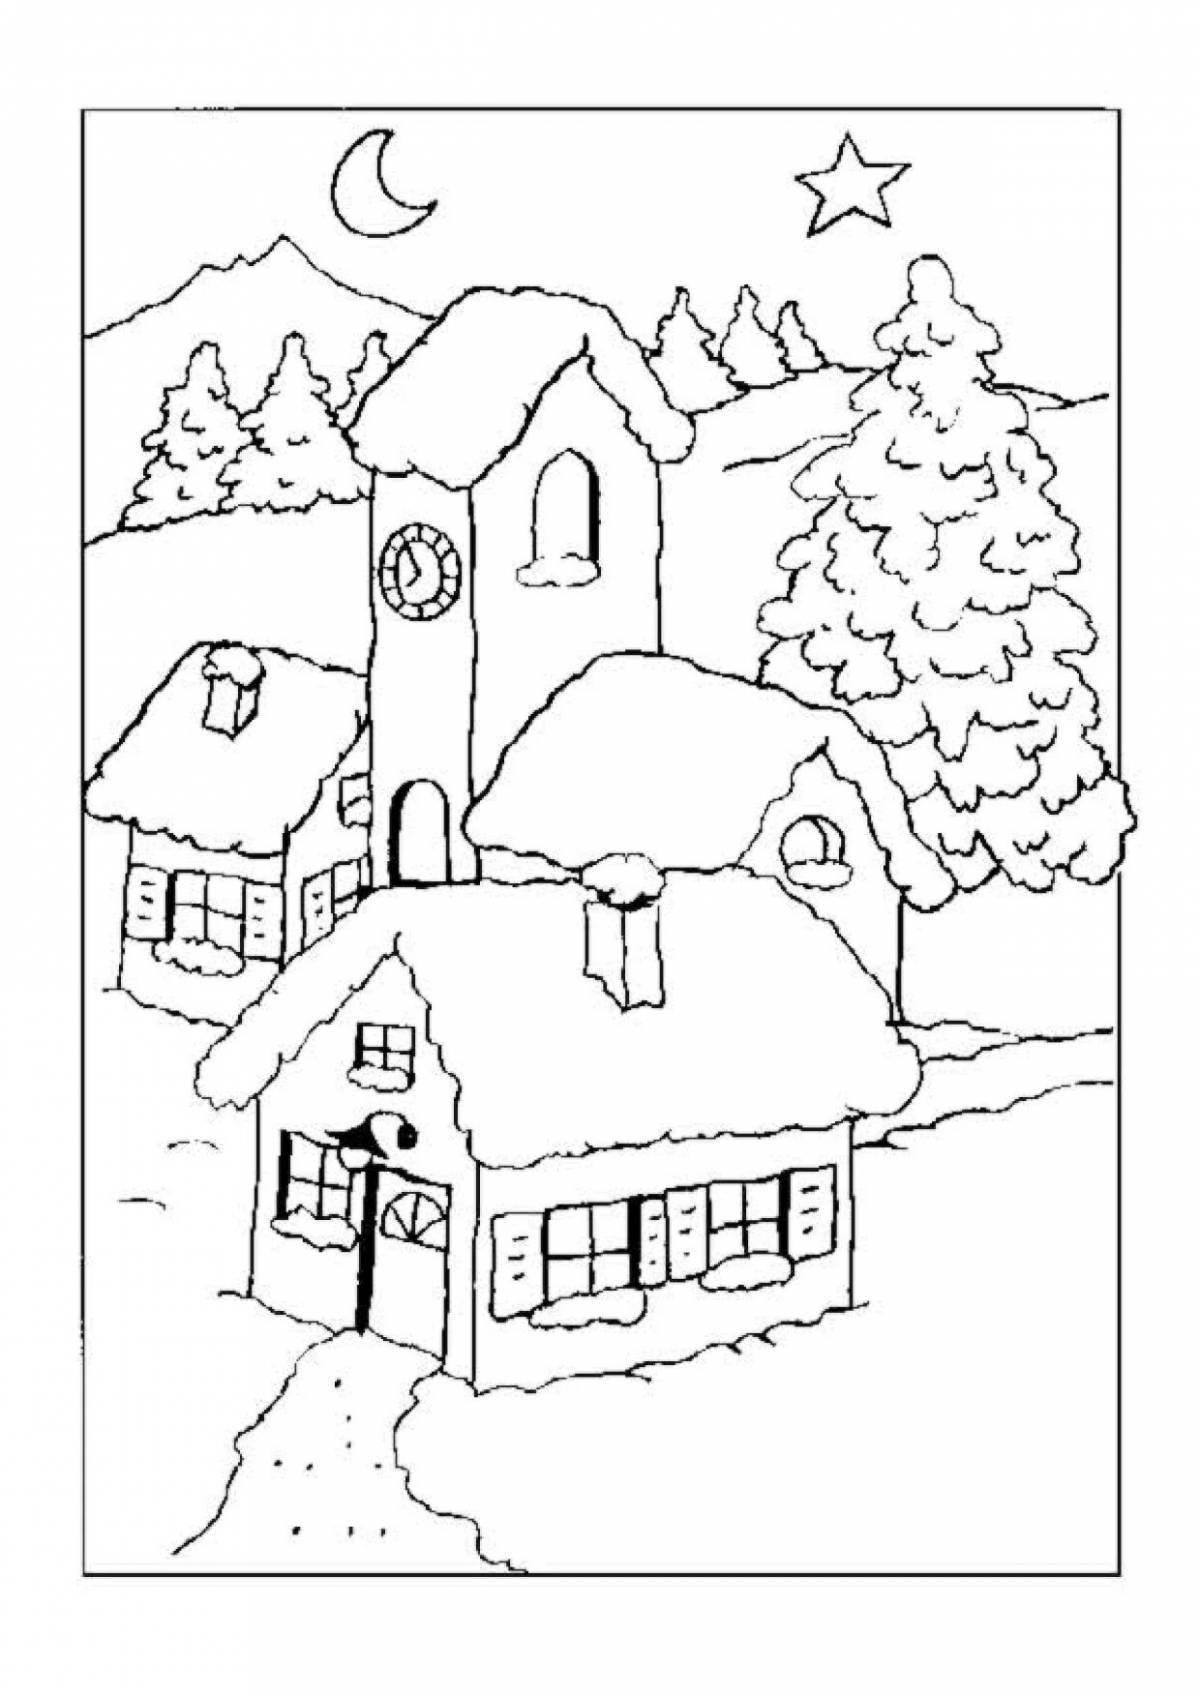 Sky winter village coloring page